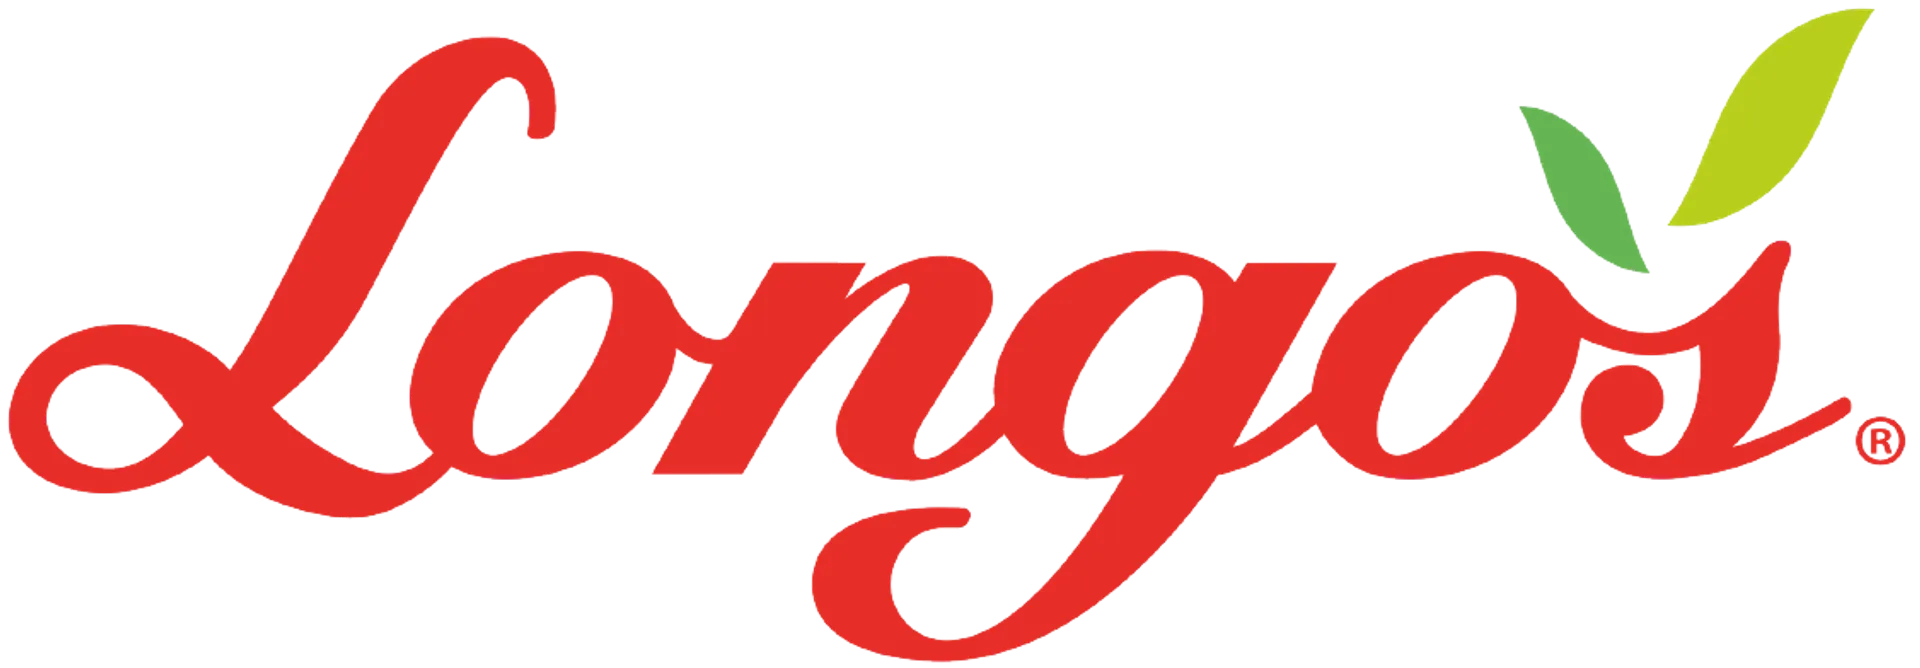 LONGO'S logo